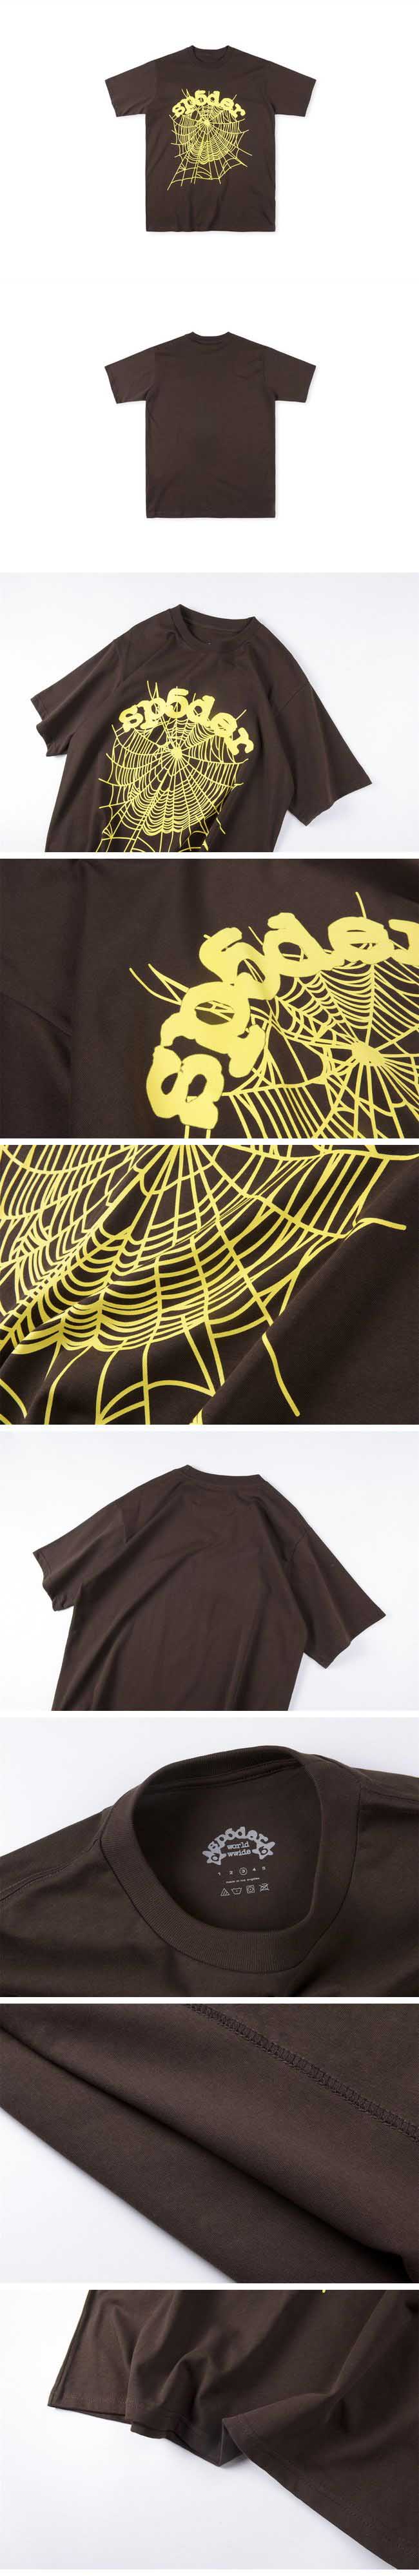 Sp5der Yellow Spider Logo Tee スパイダー イエロー スパイダー ロゴ Tシャツ